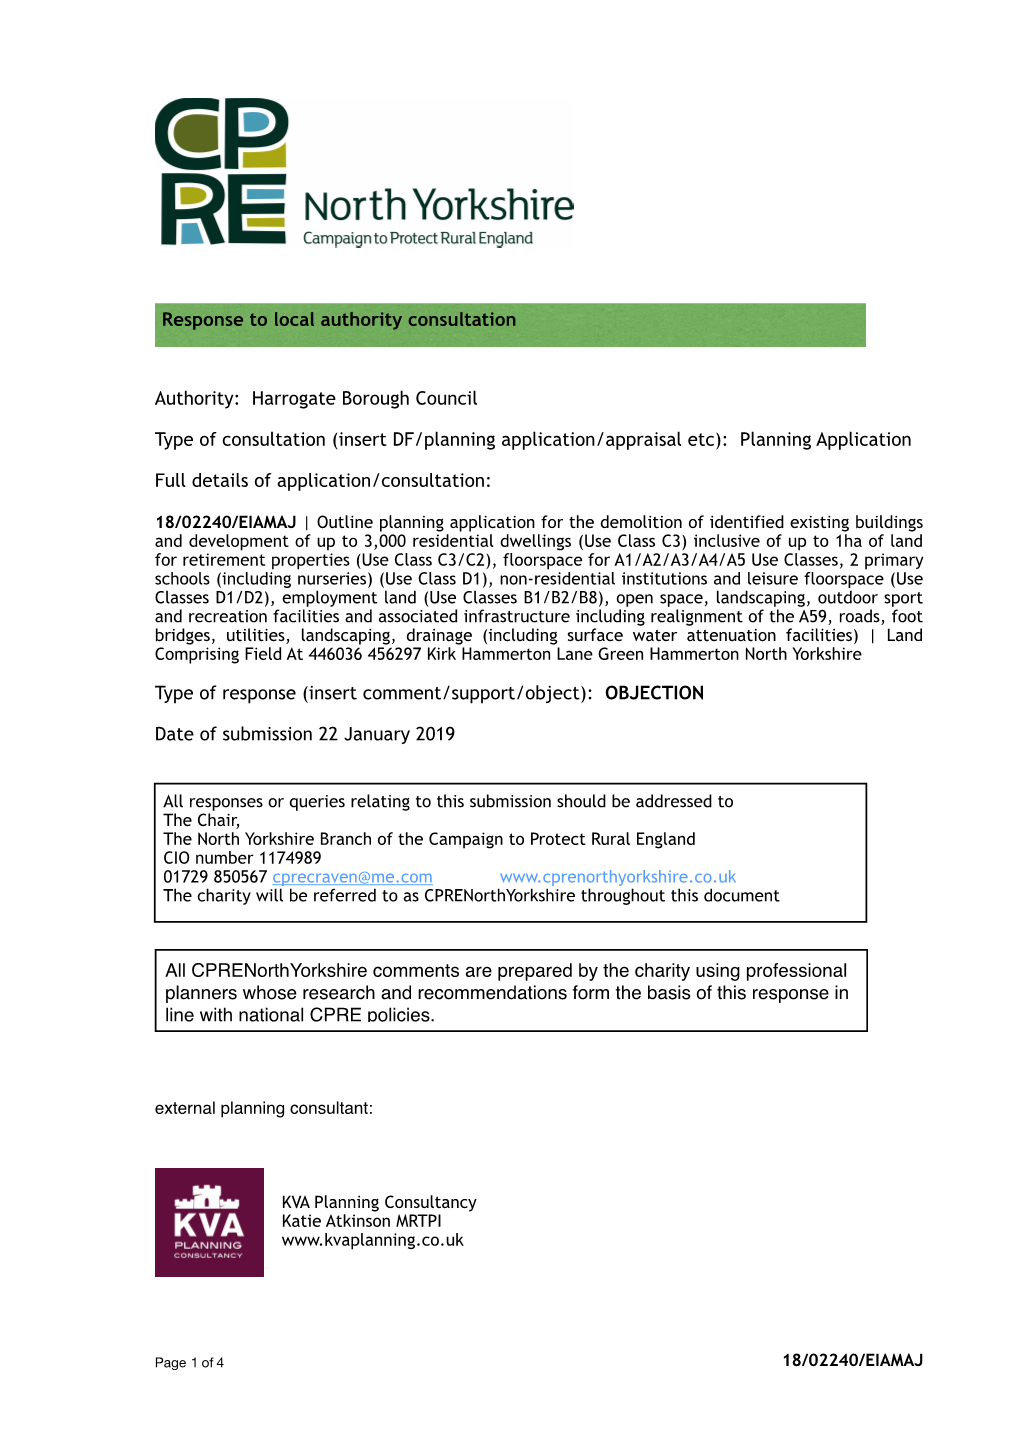 Harrogate Borough Council Type of Consultation (Insert DF/Planning